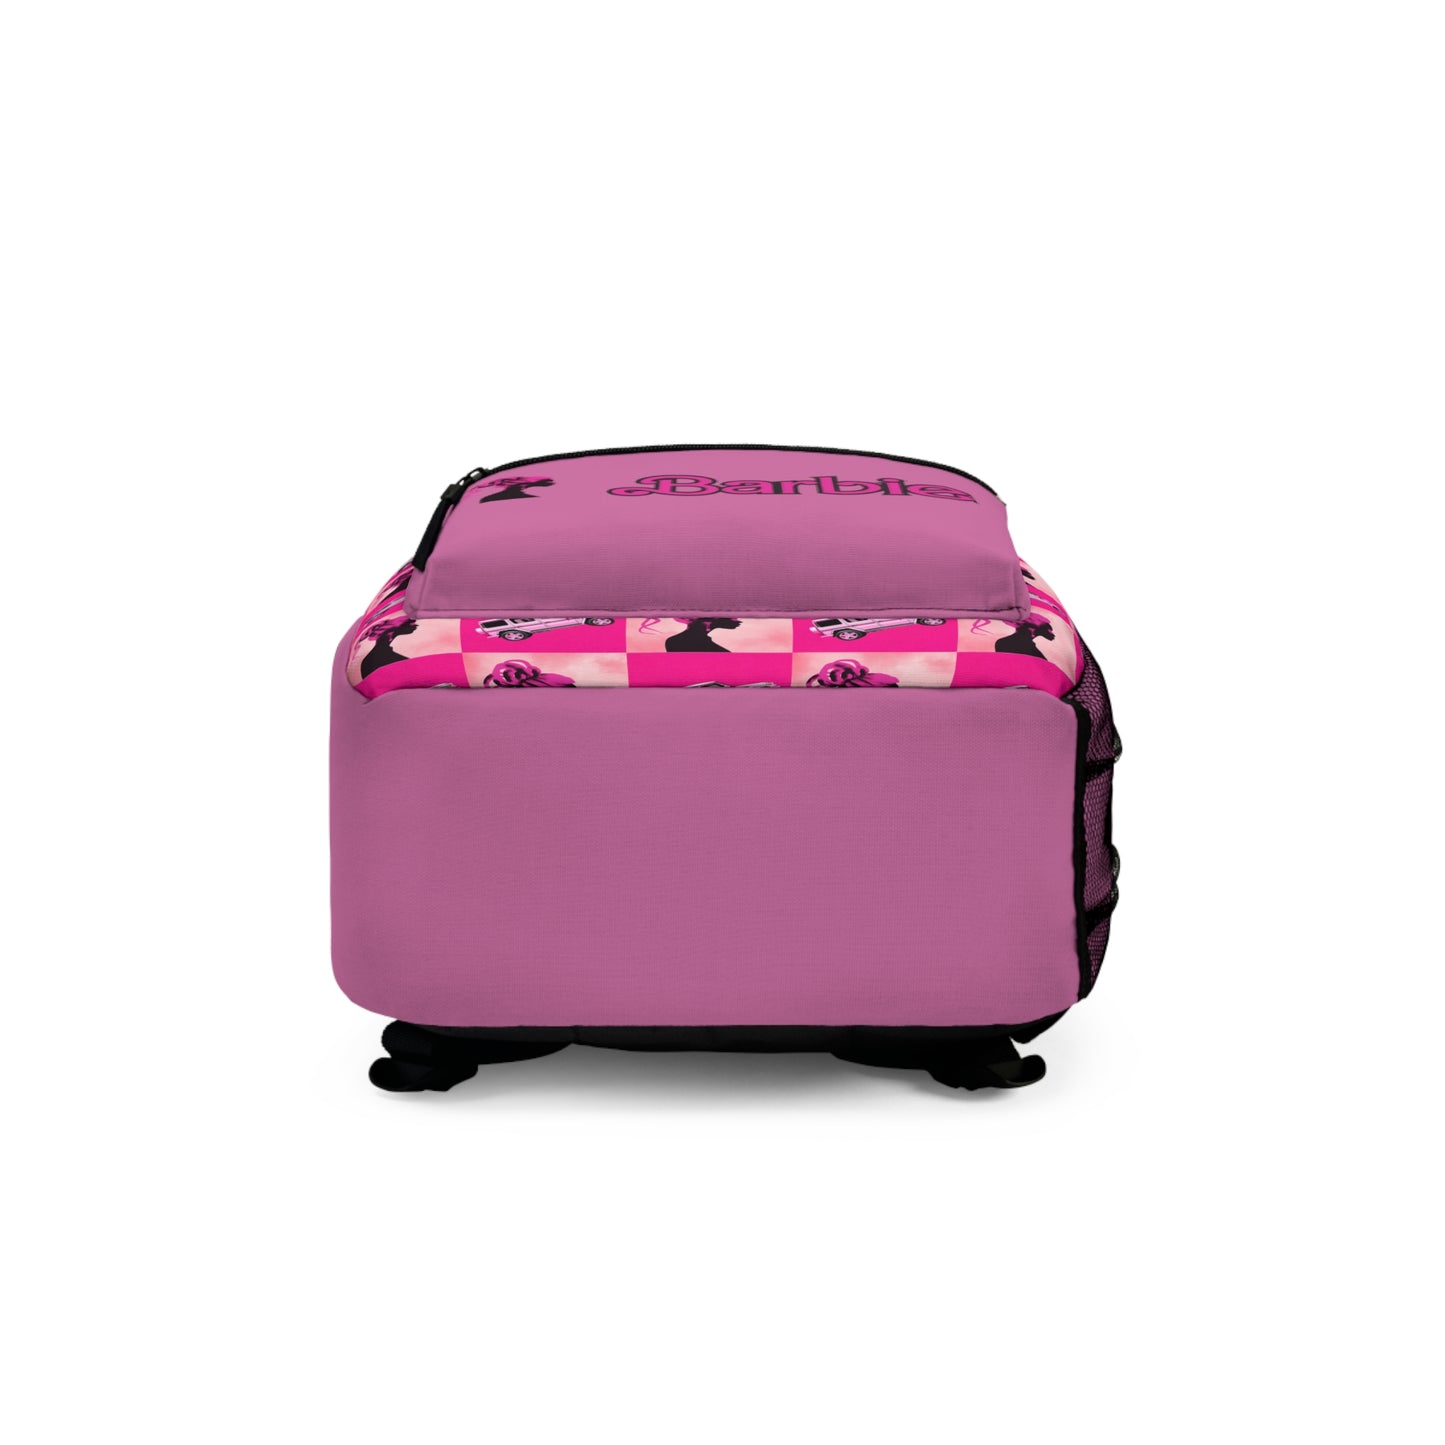 Modern Barbie Pink Backpack